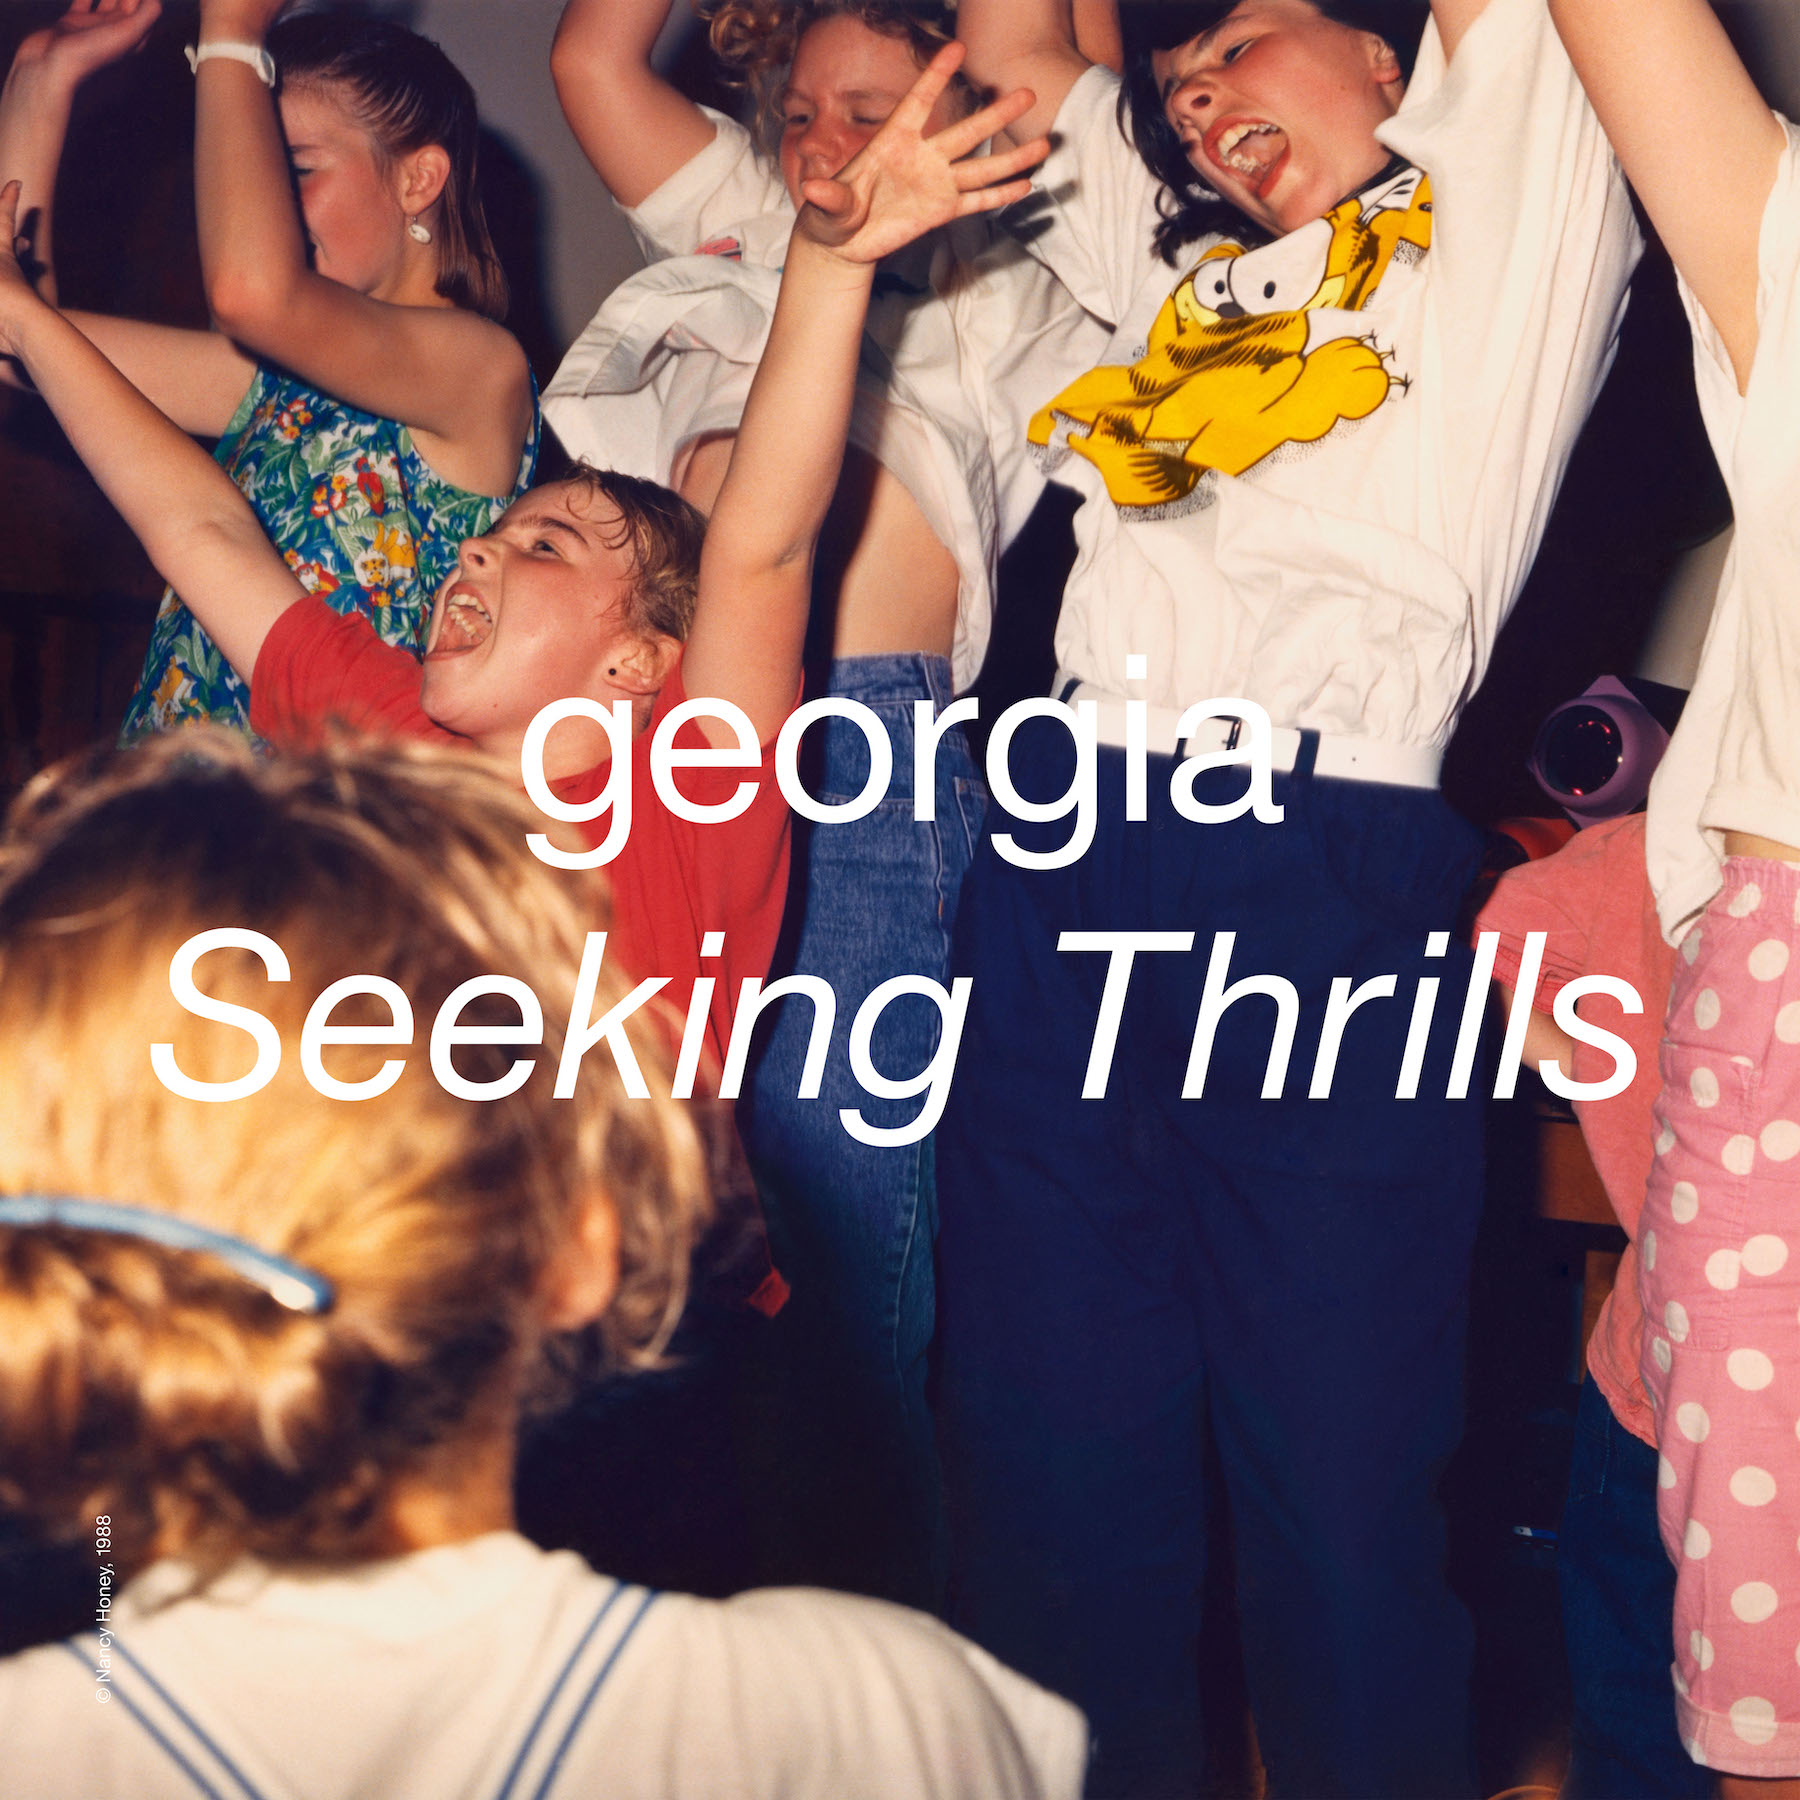 georgia-seeking-thrills-1578327071